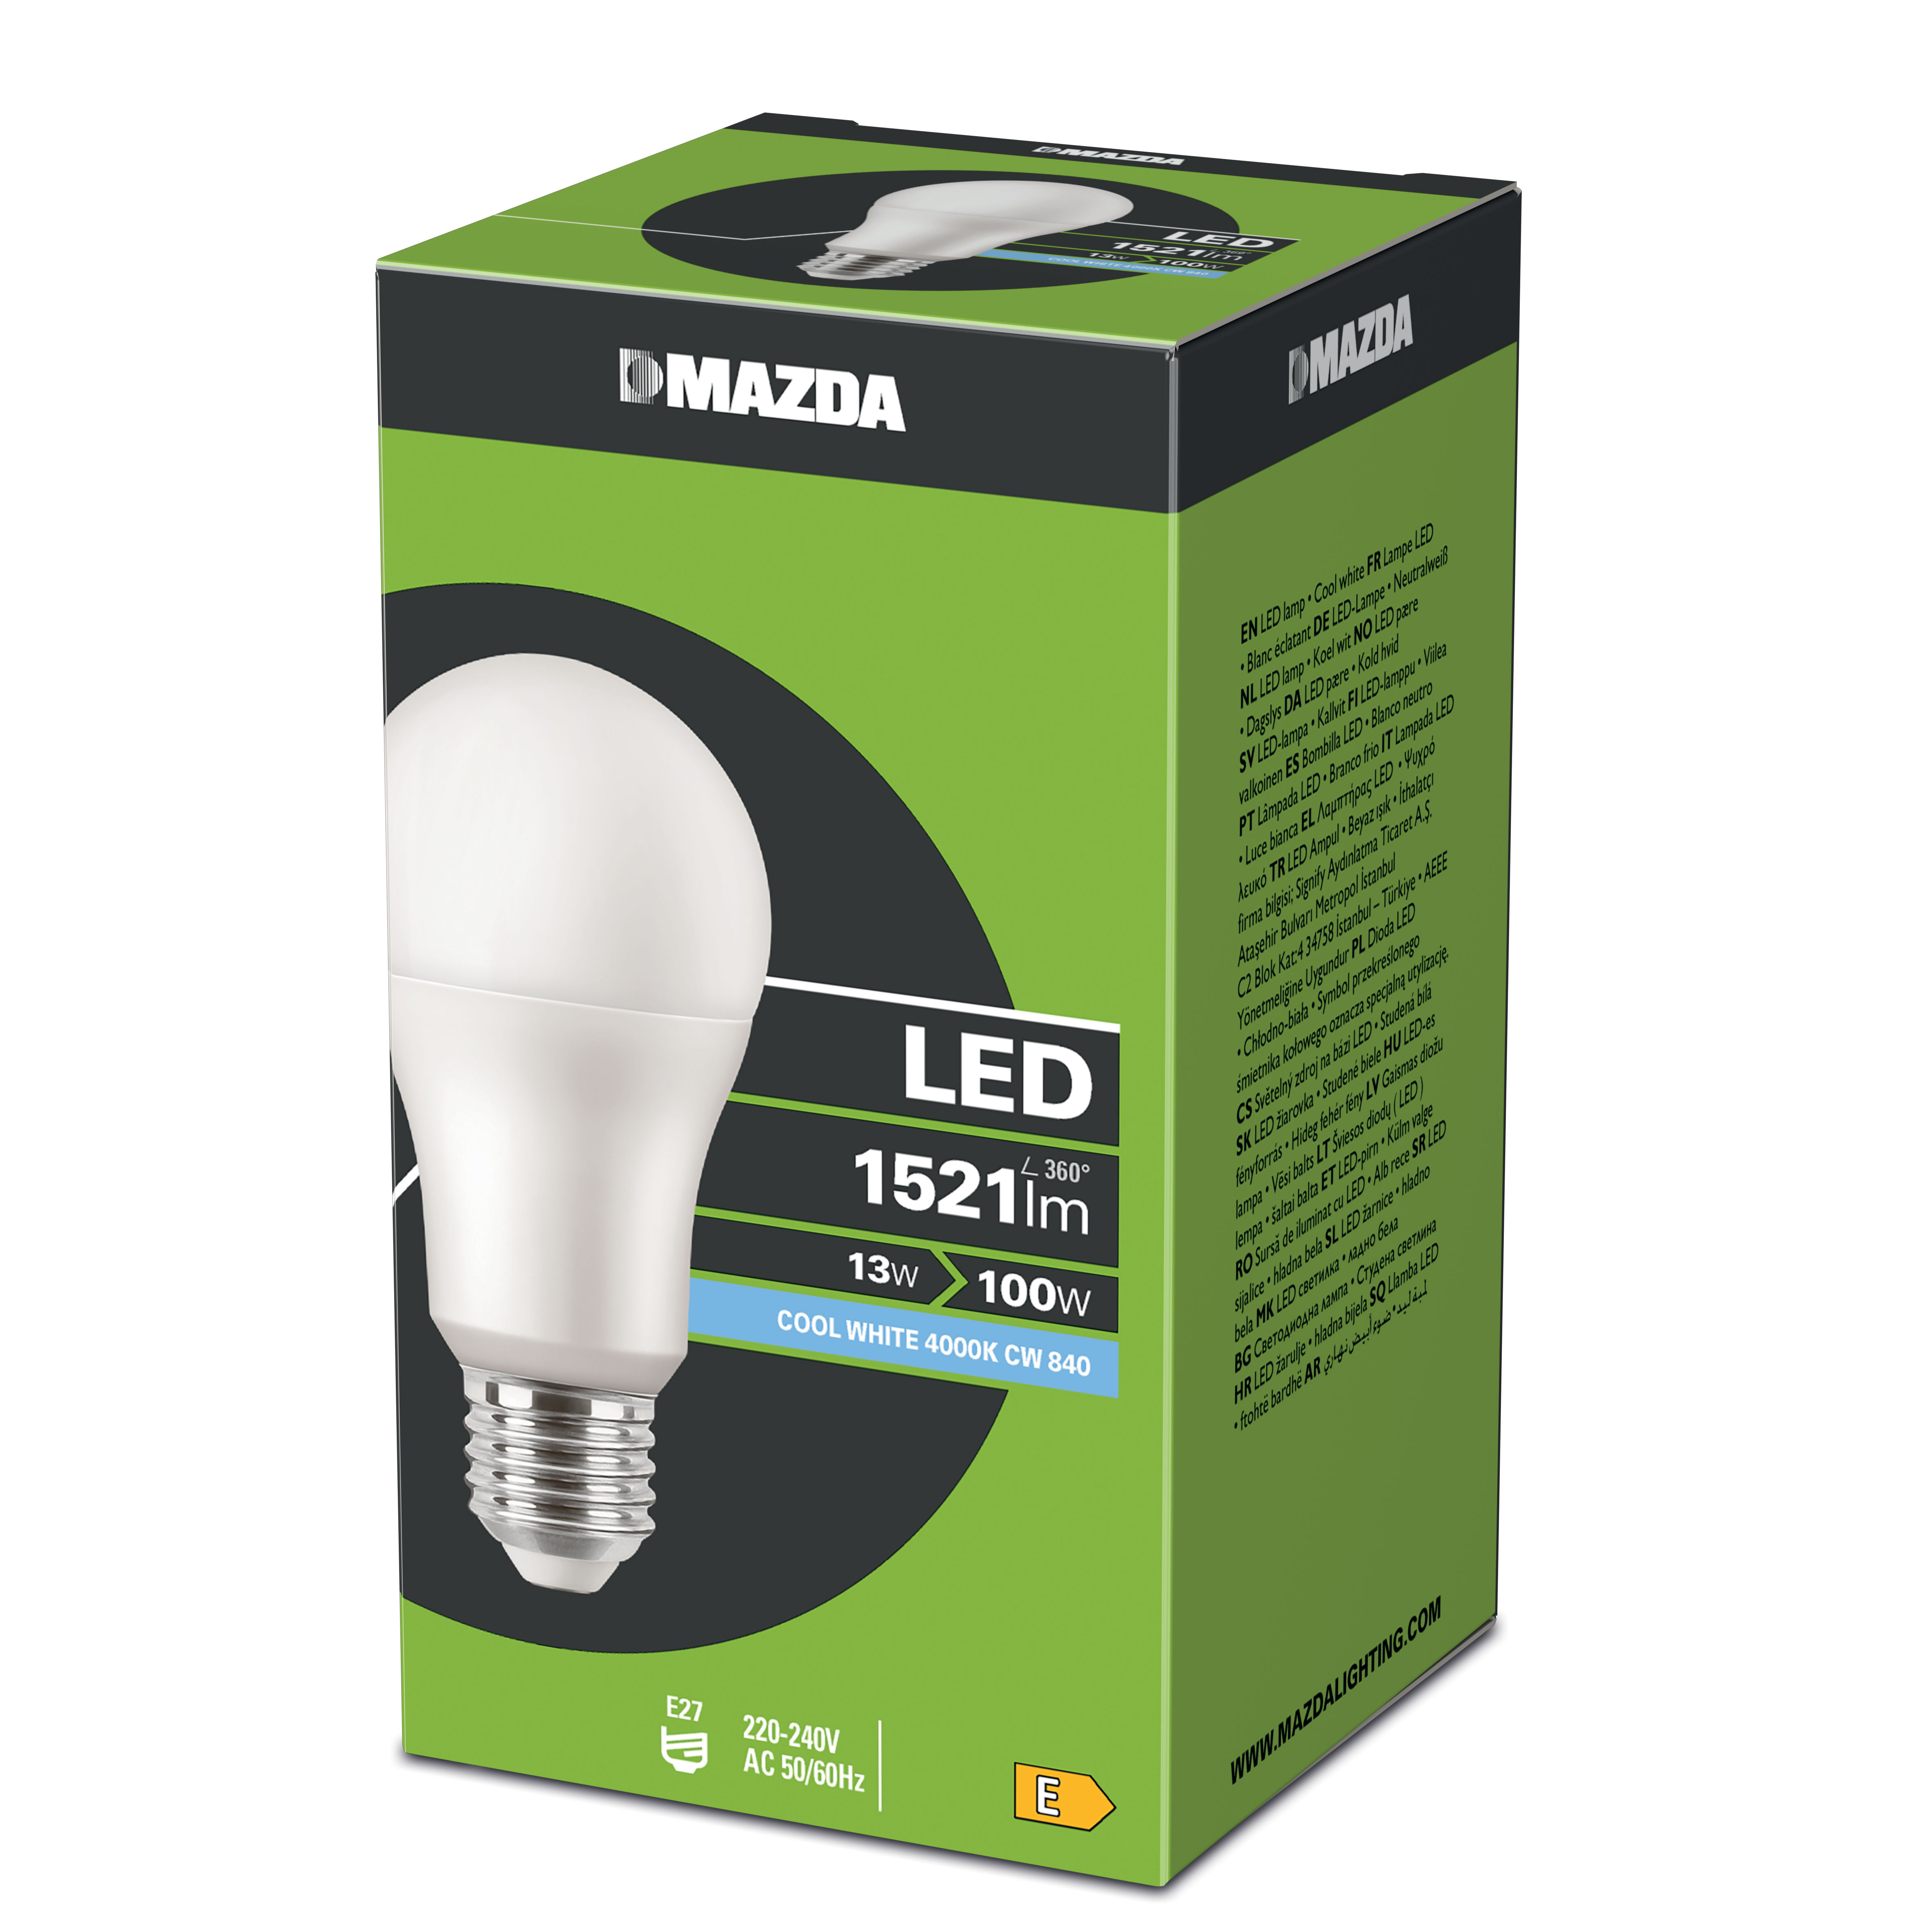 MAZDA LED LAMP 100W A67 E27 COOL WHITE 4000K 840